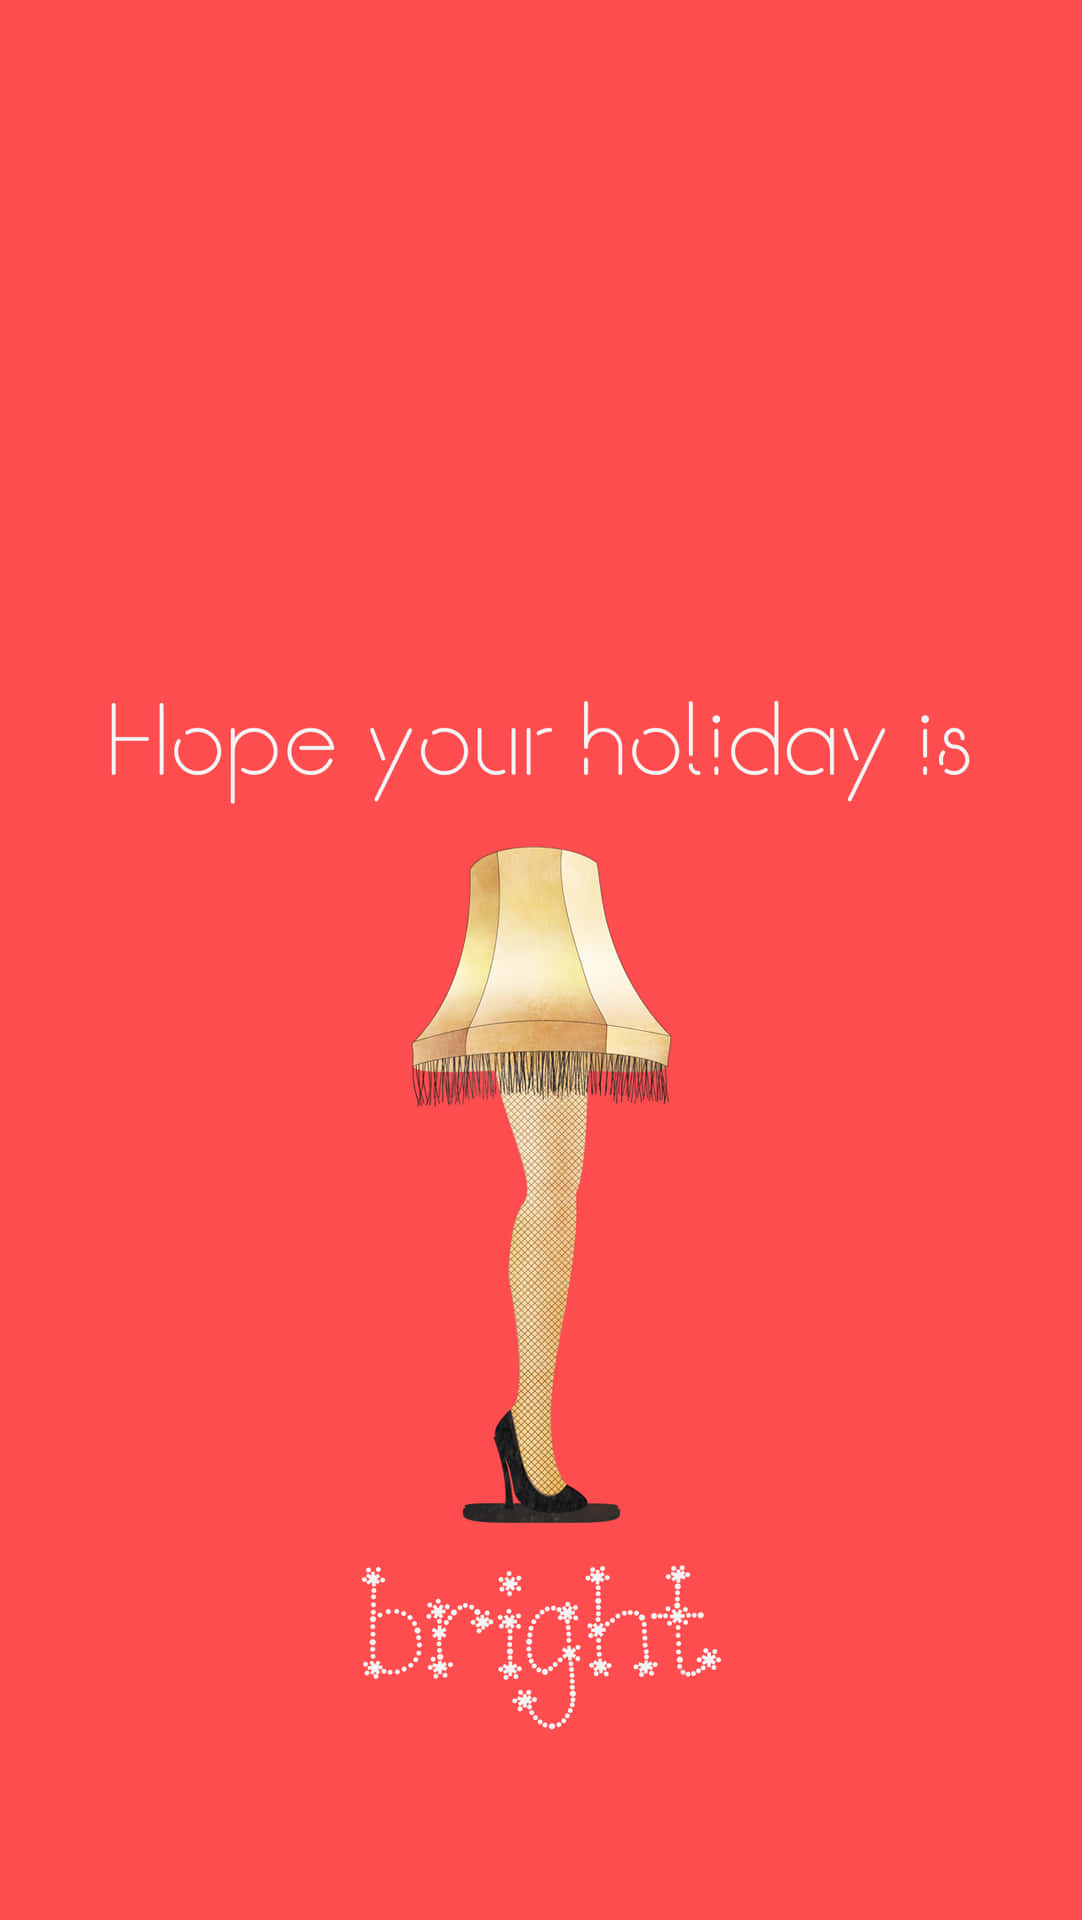 A Christmas Story Leg Lamp Holiday Greetings Wallpaper